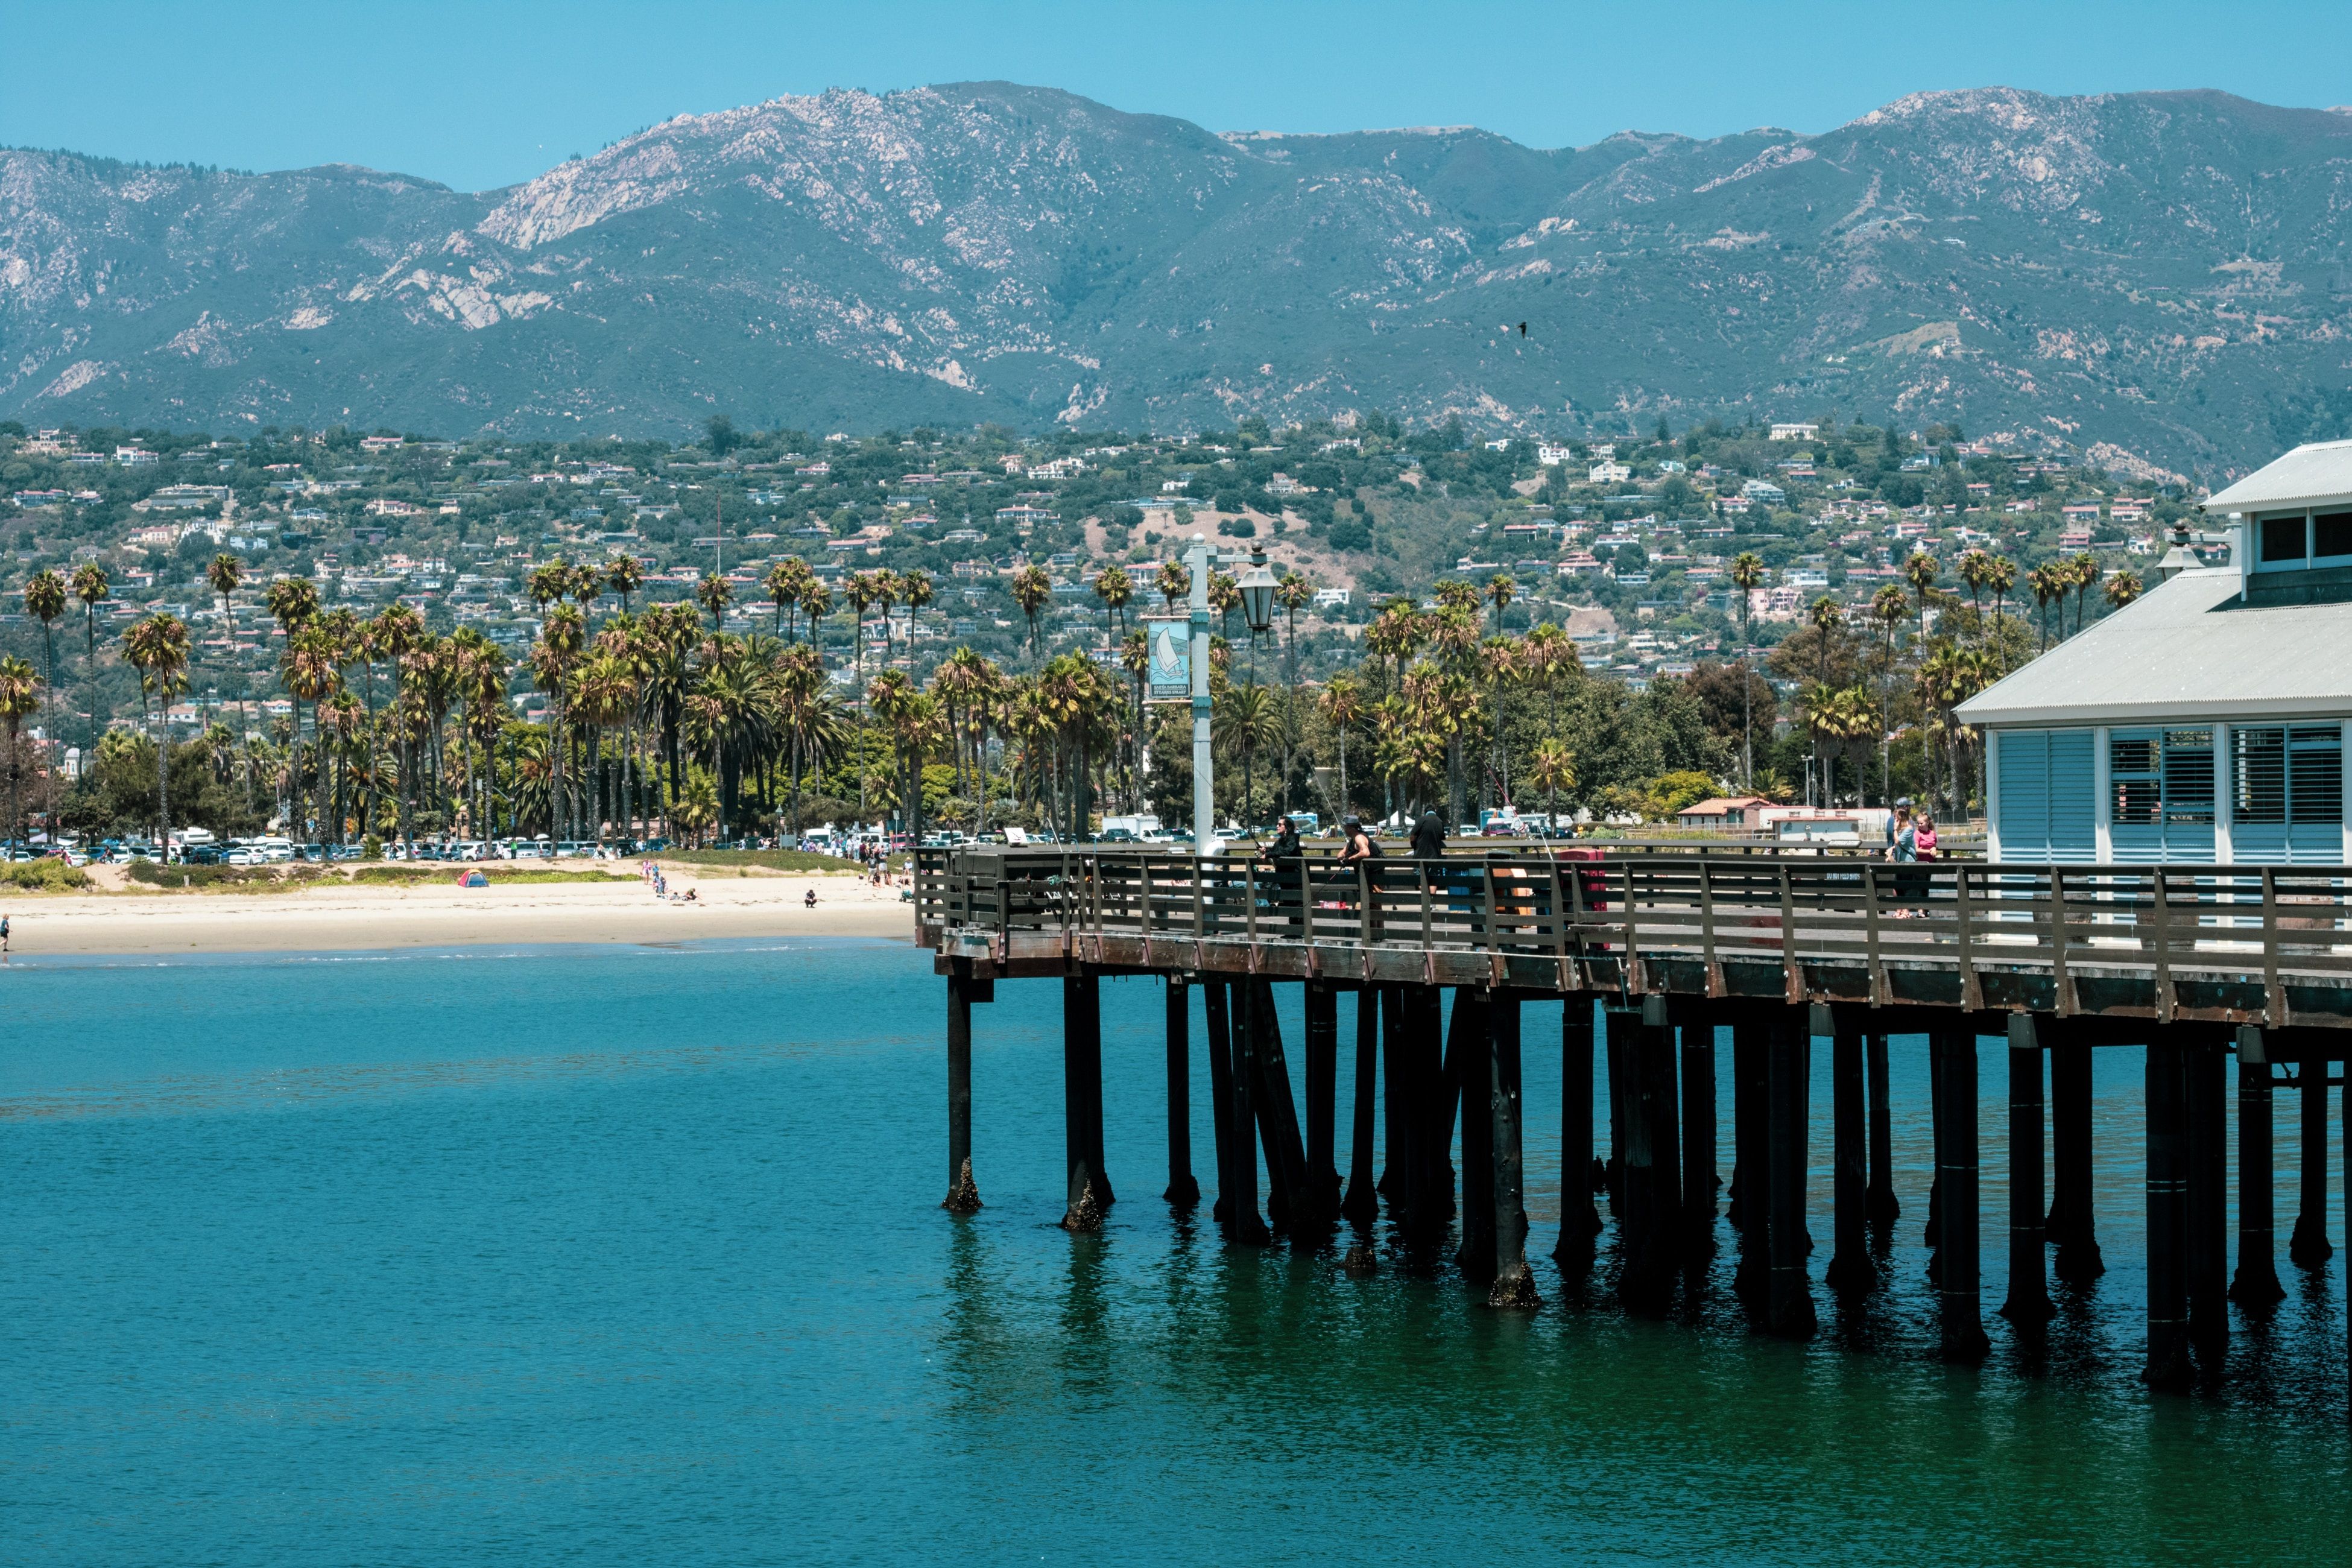 Beach and pier view of Santa Barbara, California 